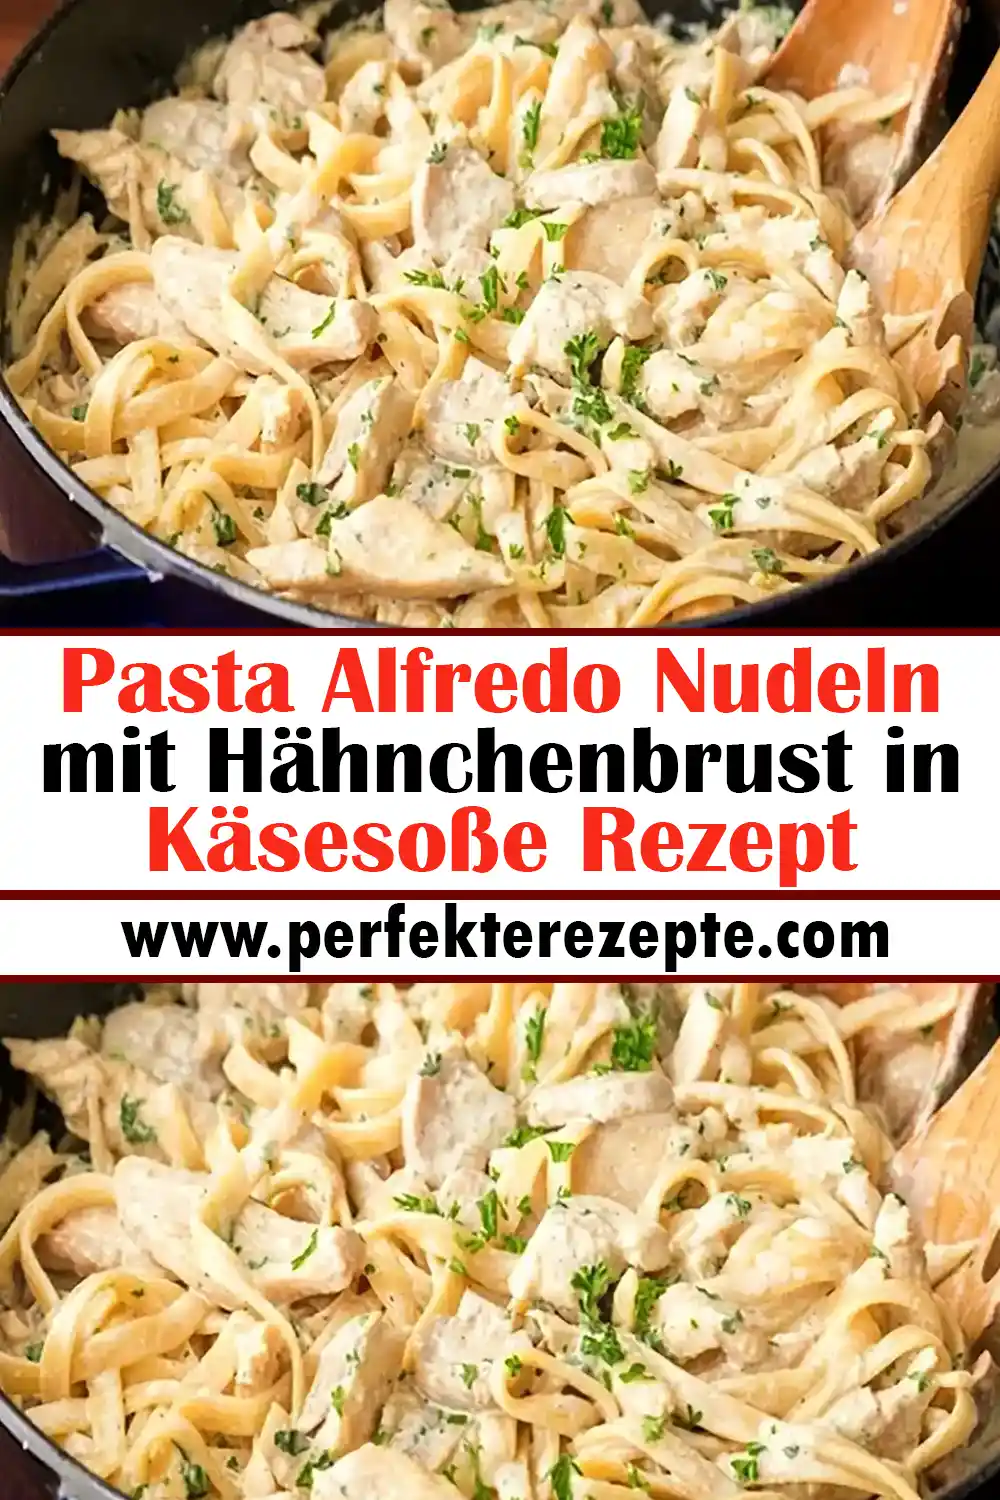 Pasta Alfredo Nudeln mit Hähnchenbrust in Käsesoße Rezept